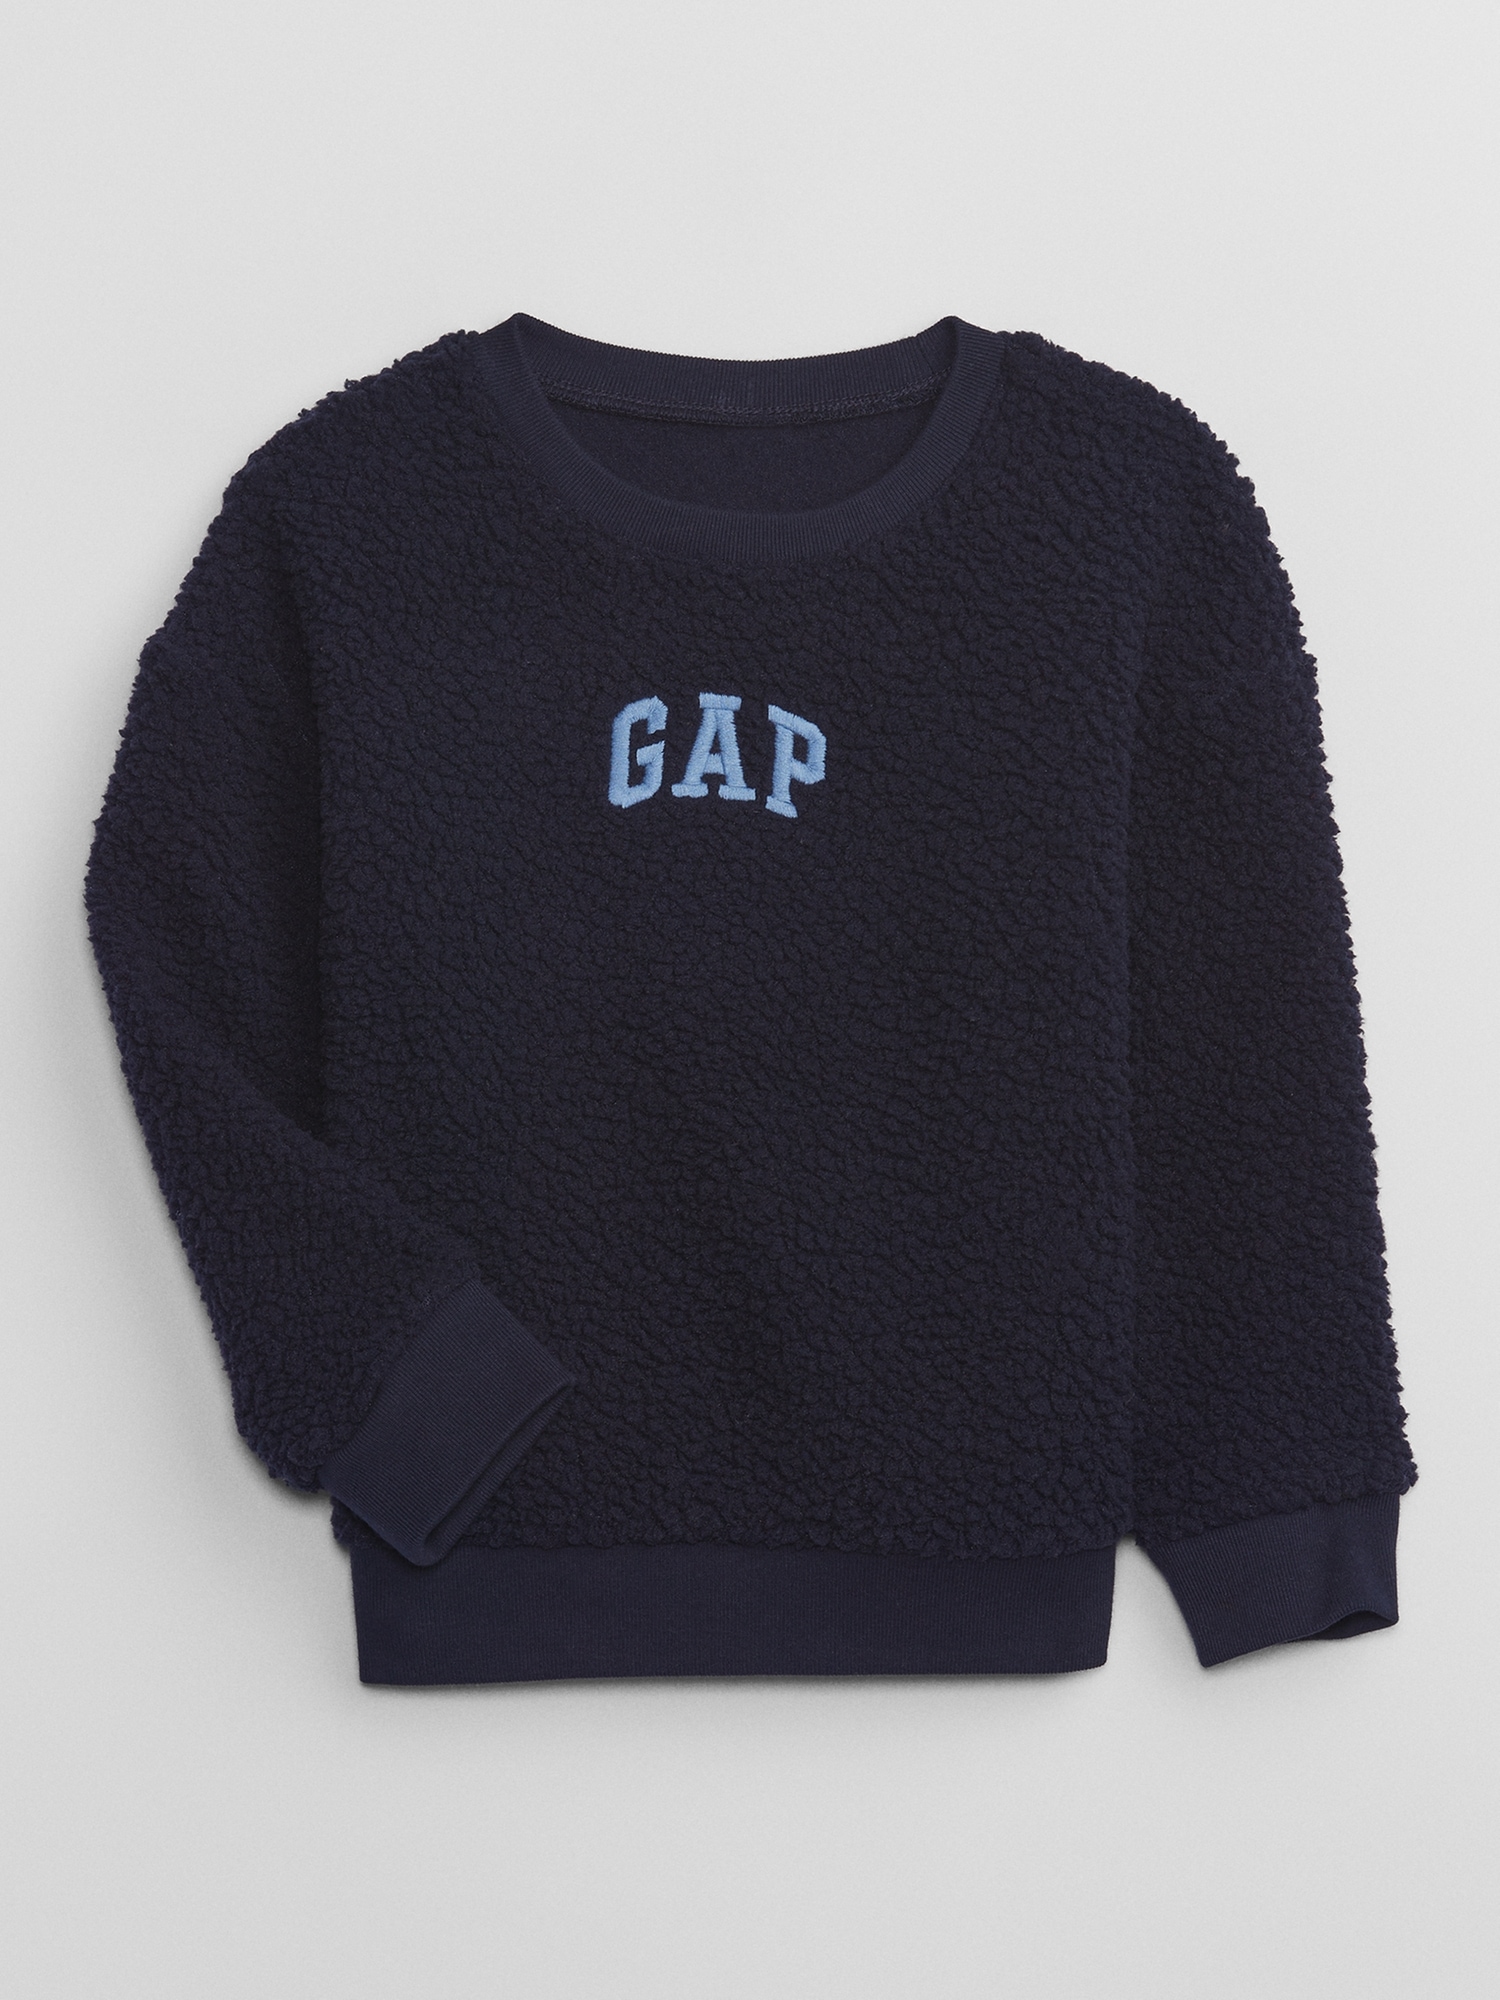 babyGap Logo Sherpa Sweatshirt